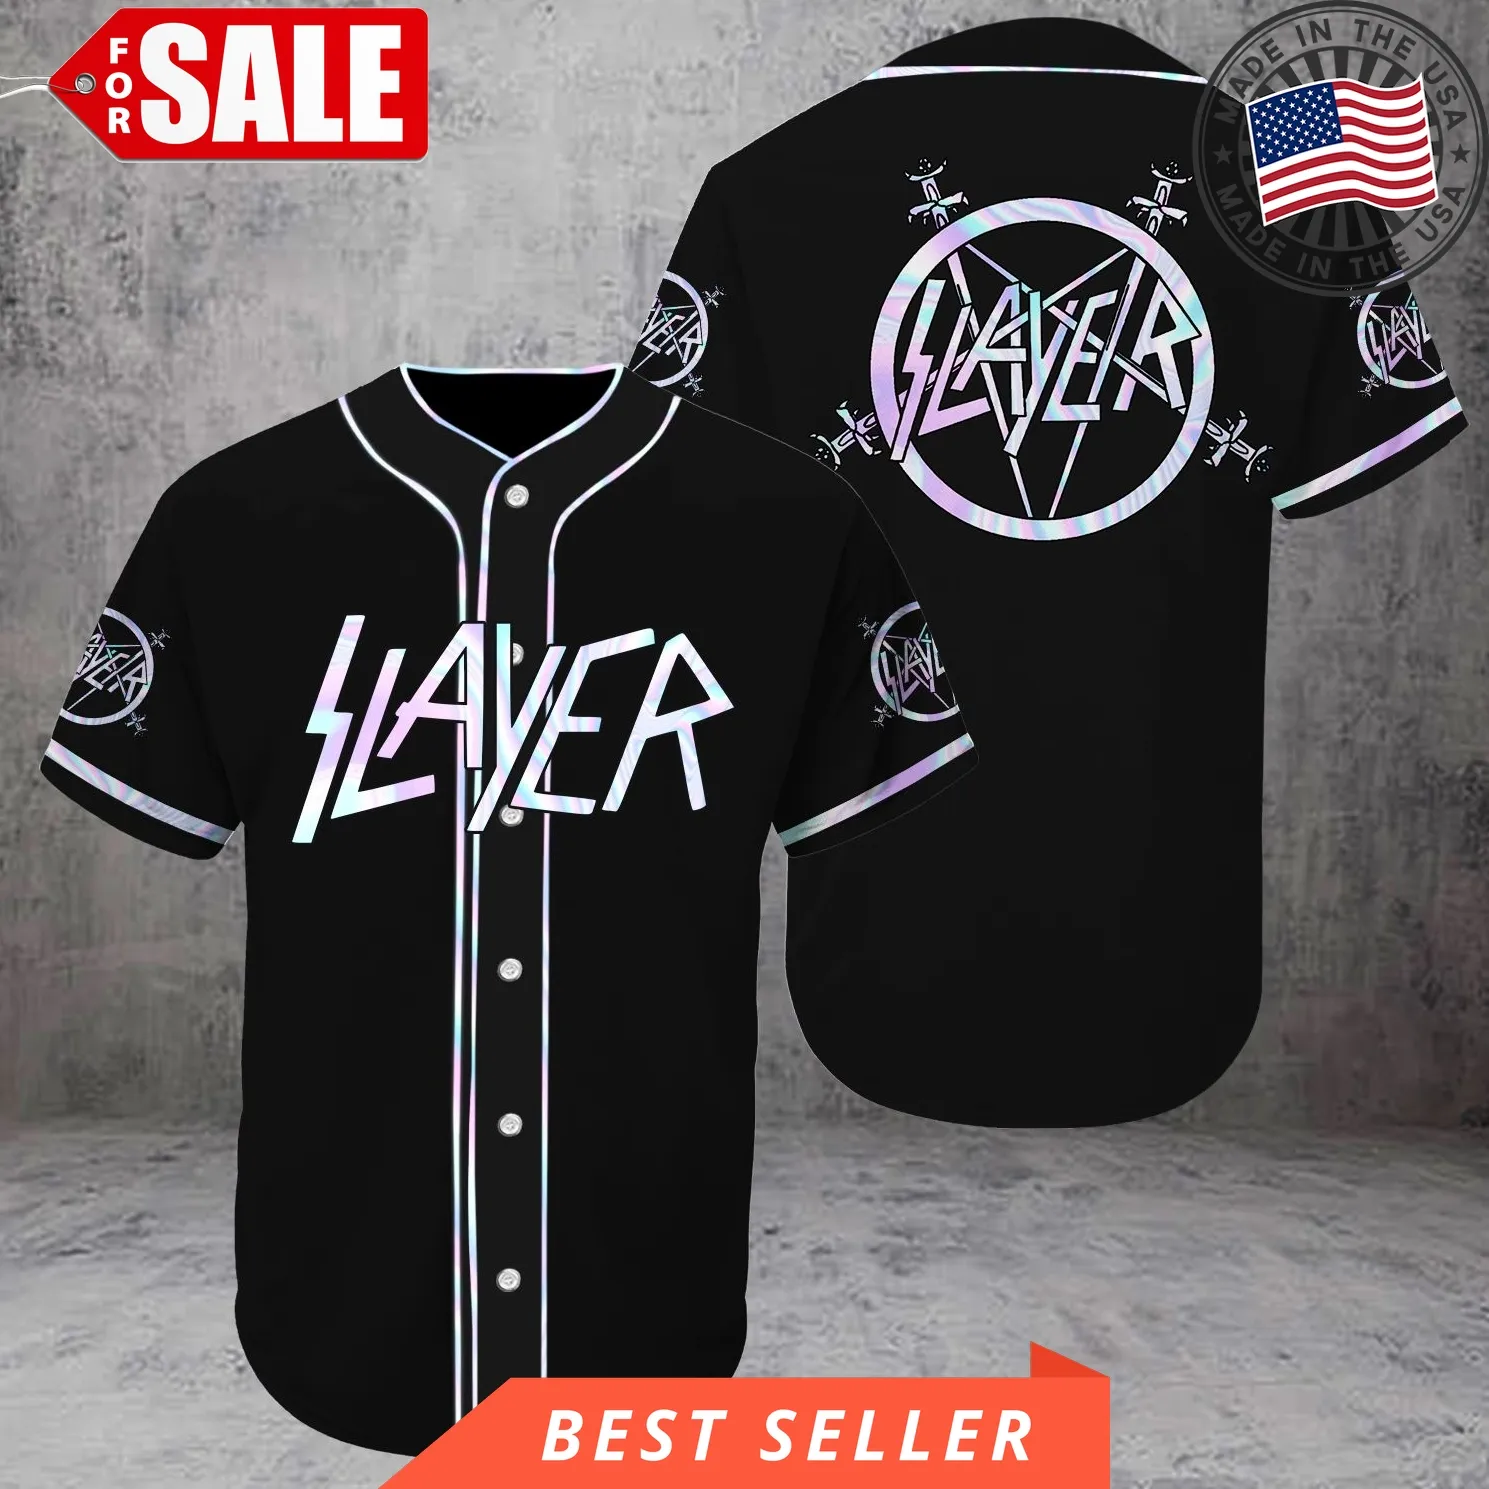 Holo Slayer Baseball Tee Jersey Shirt Unisex Men Women